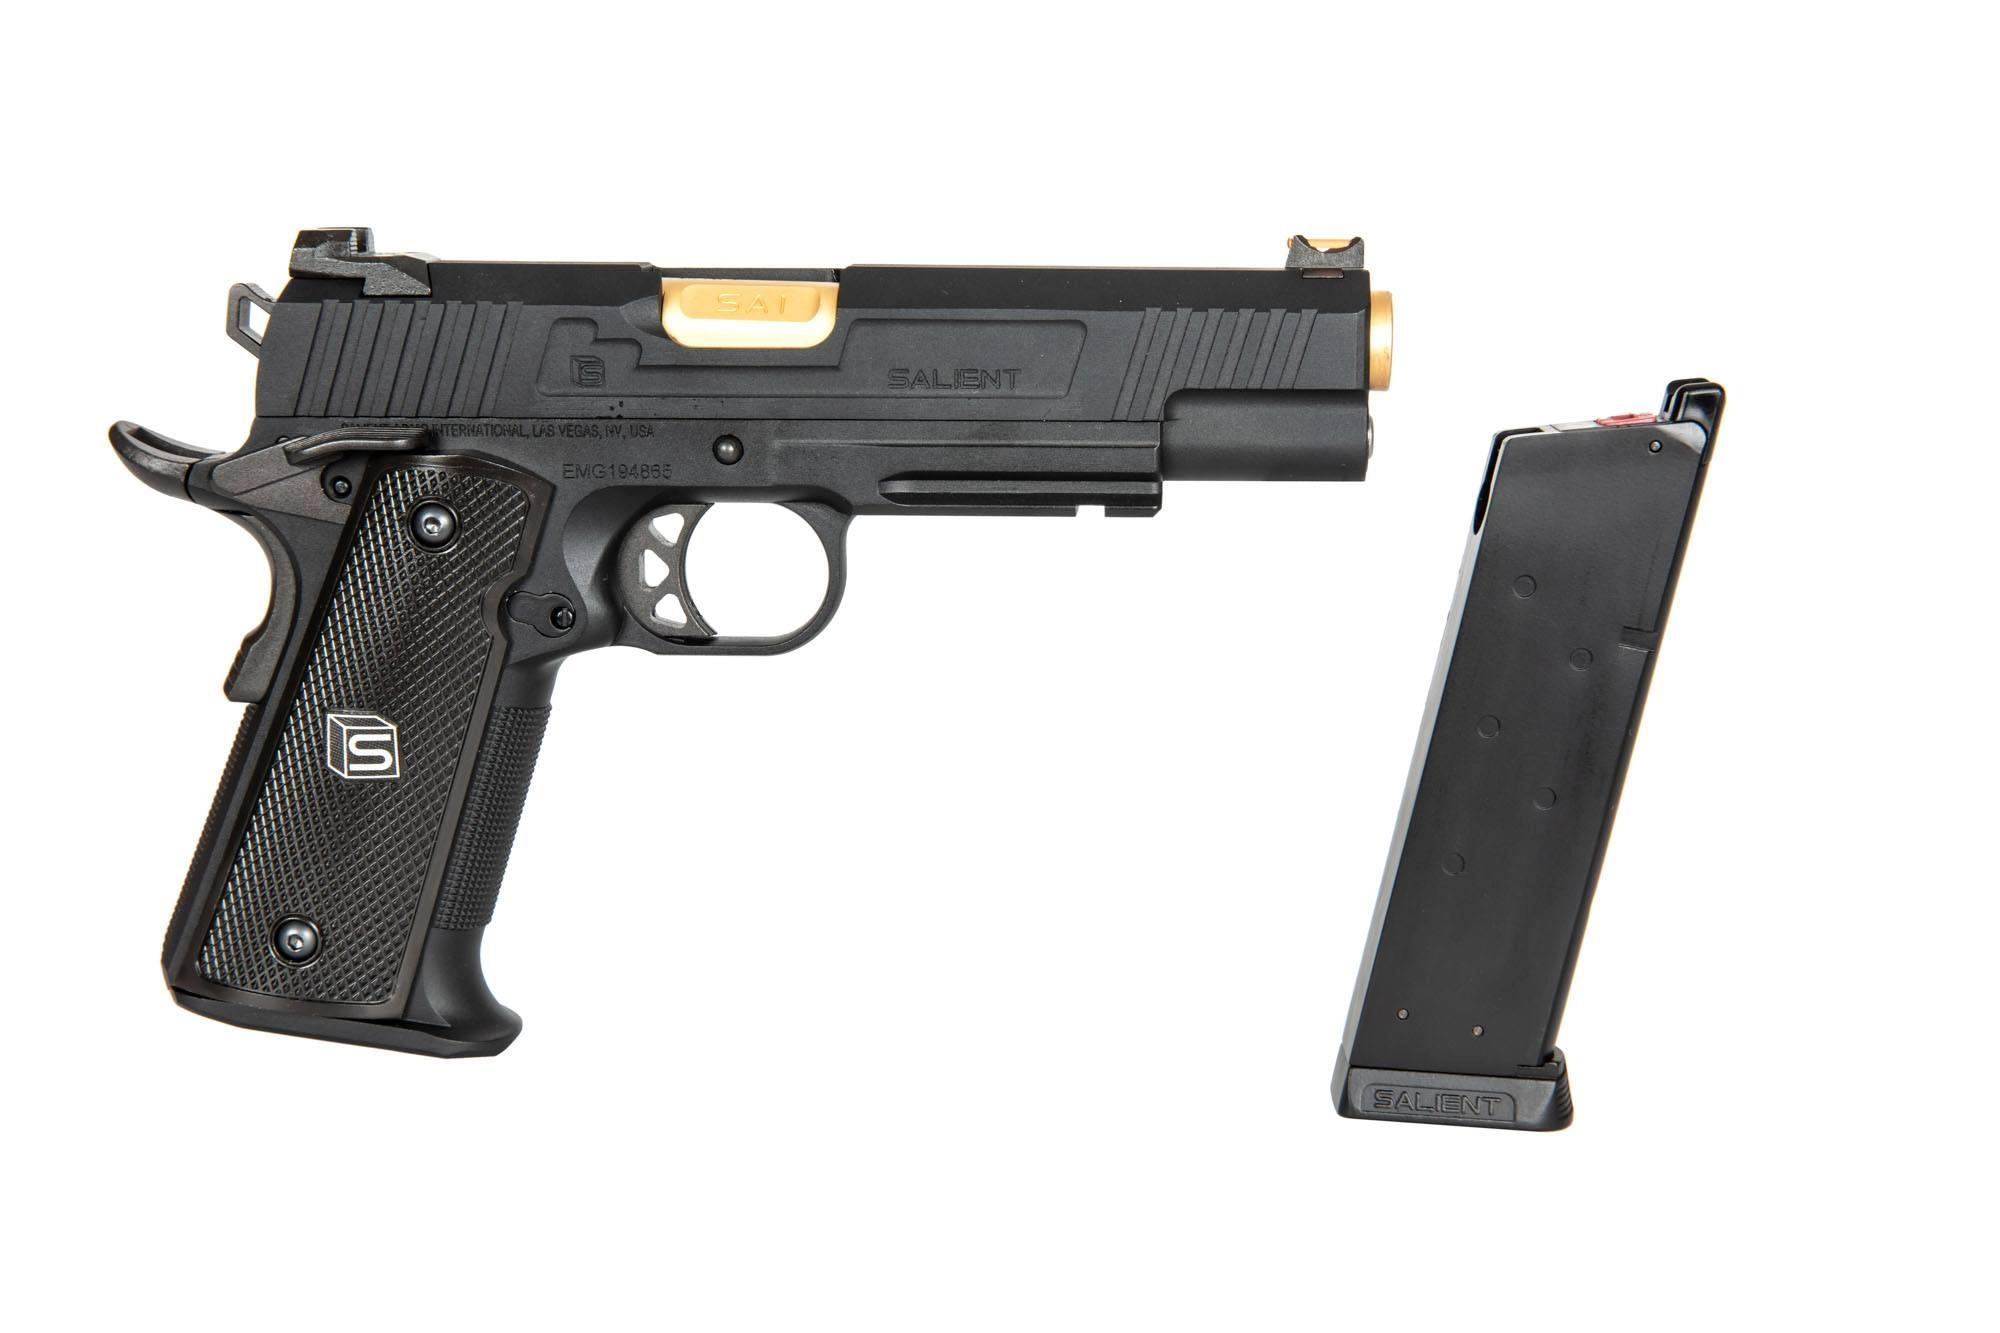 EMG / SAI RED 1911 BlowBack pistooli, metallinen - musta